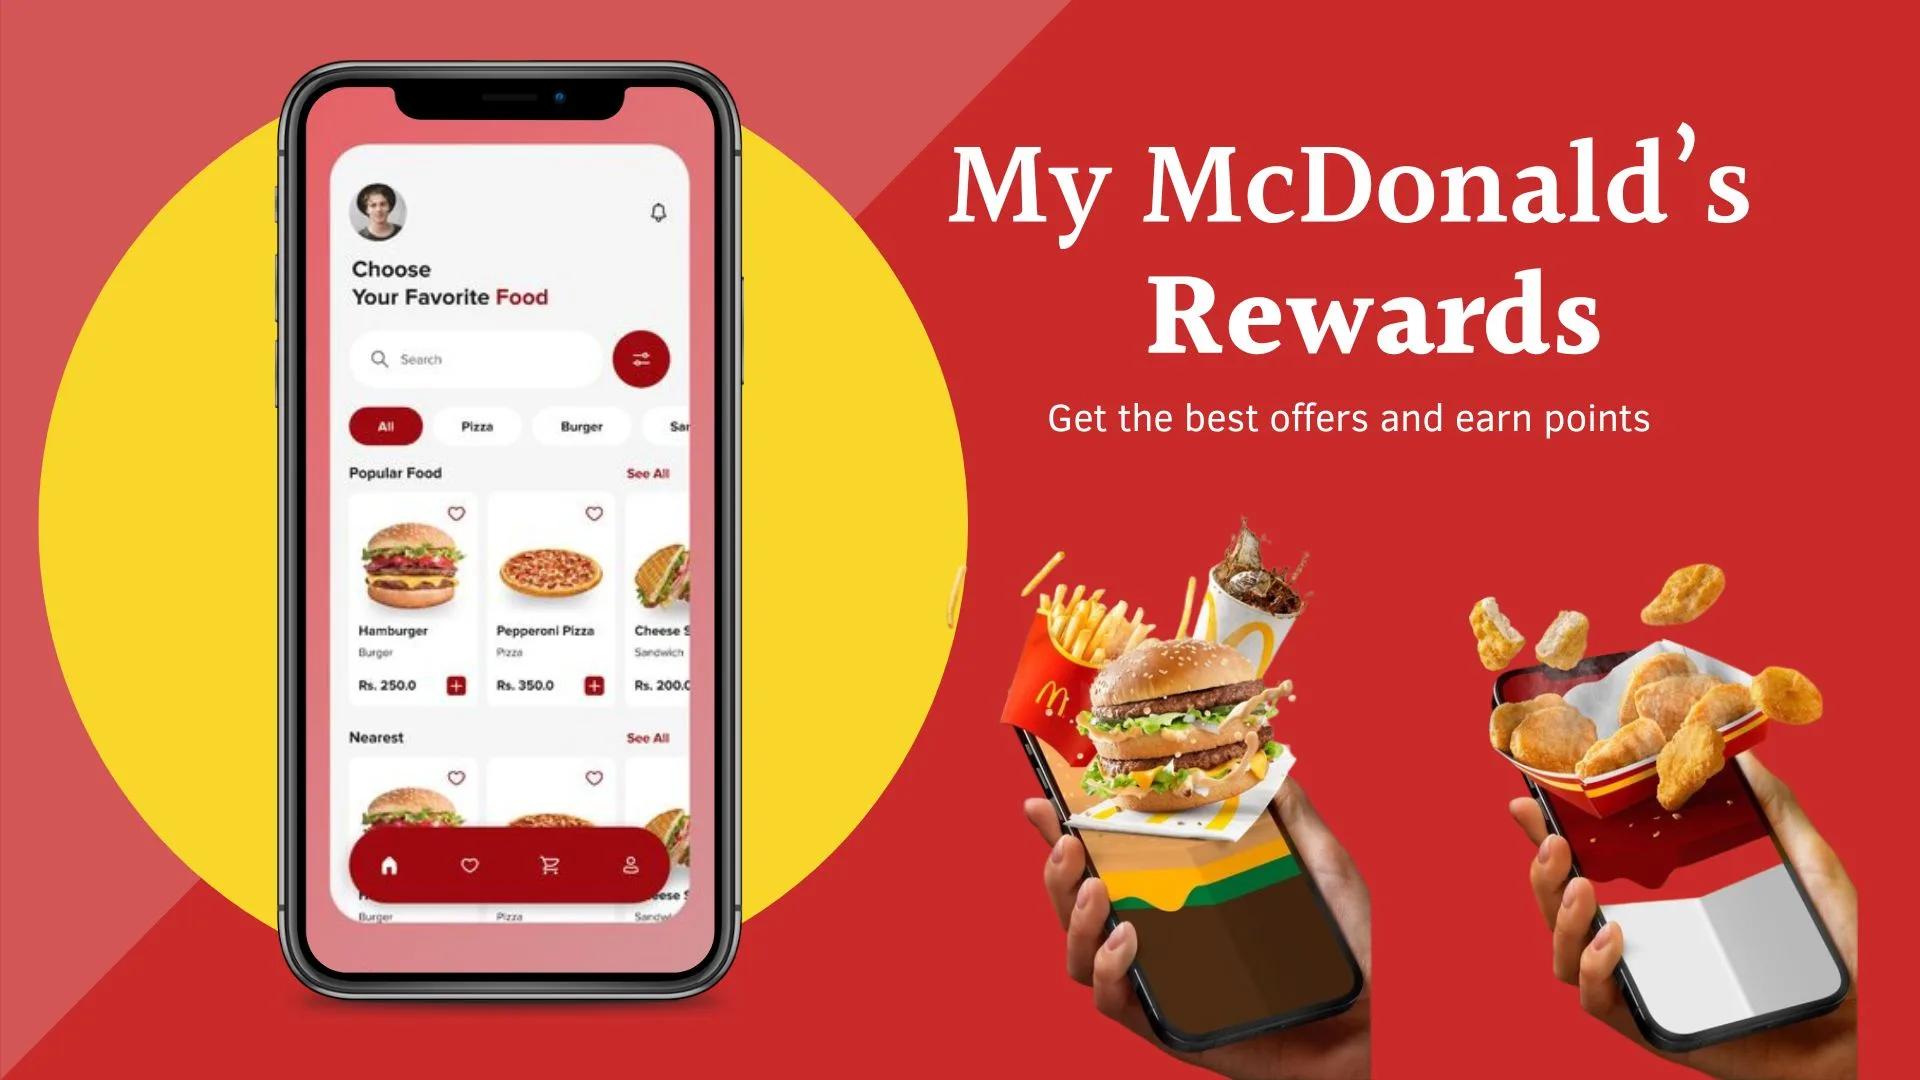 My McDonald's Rewards - Earn Points, Get Free Food & Deals